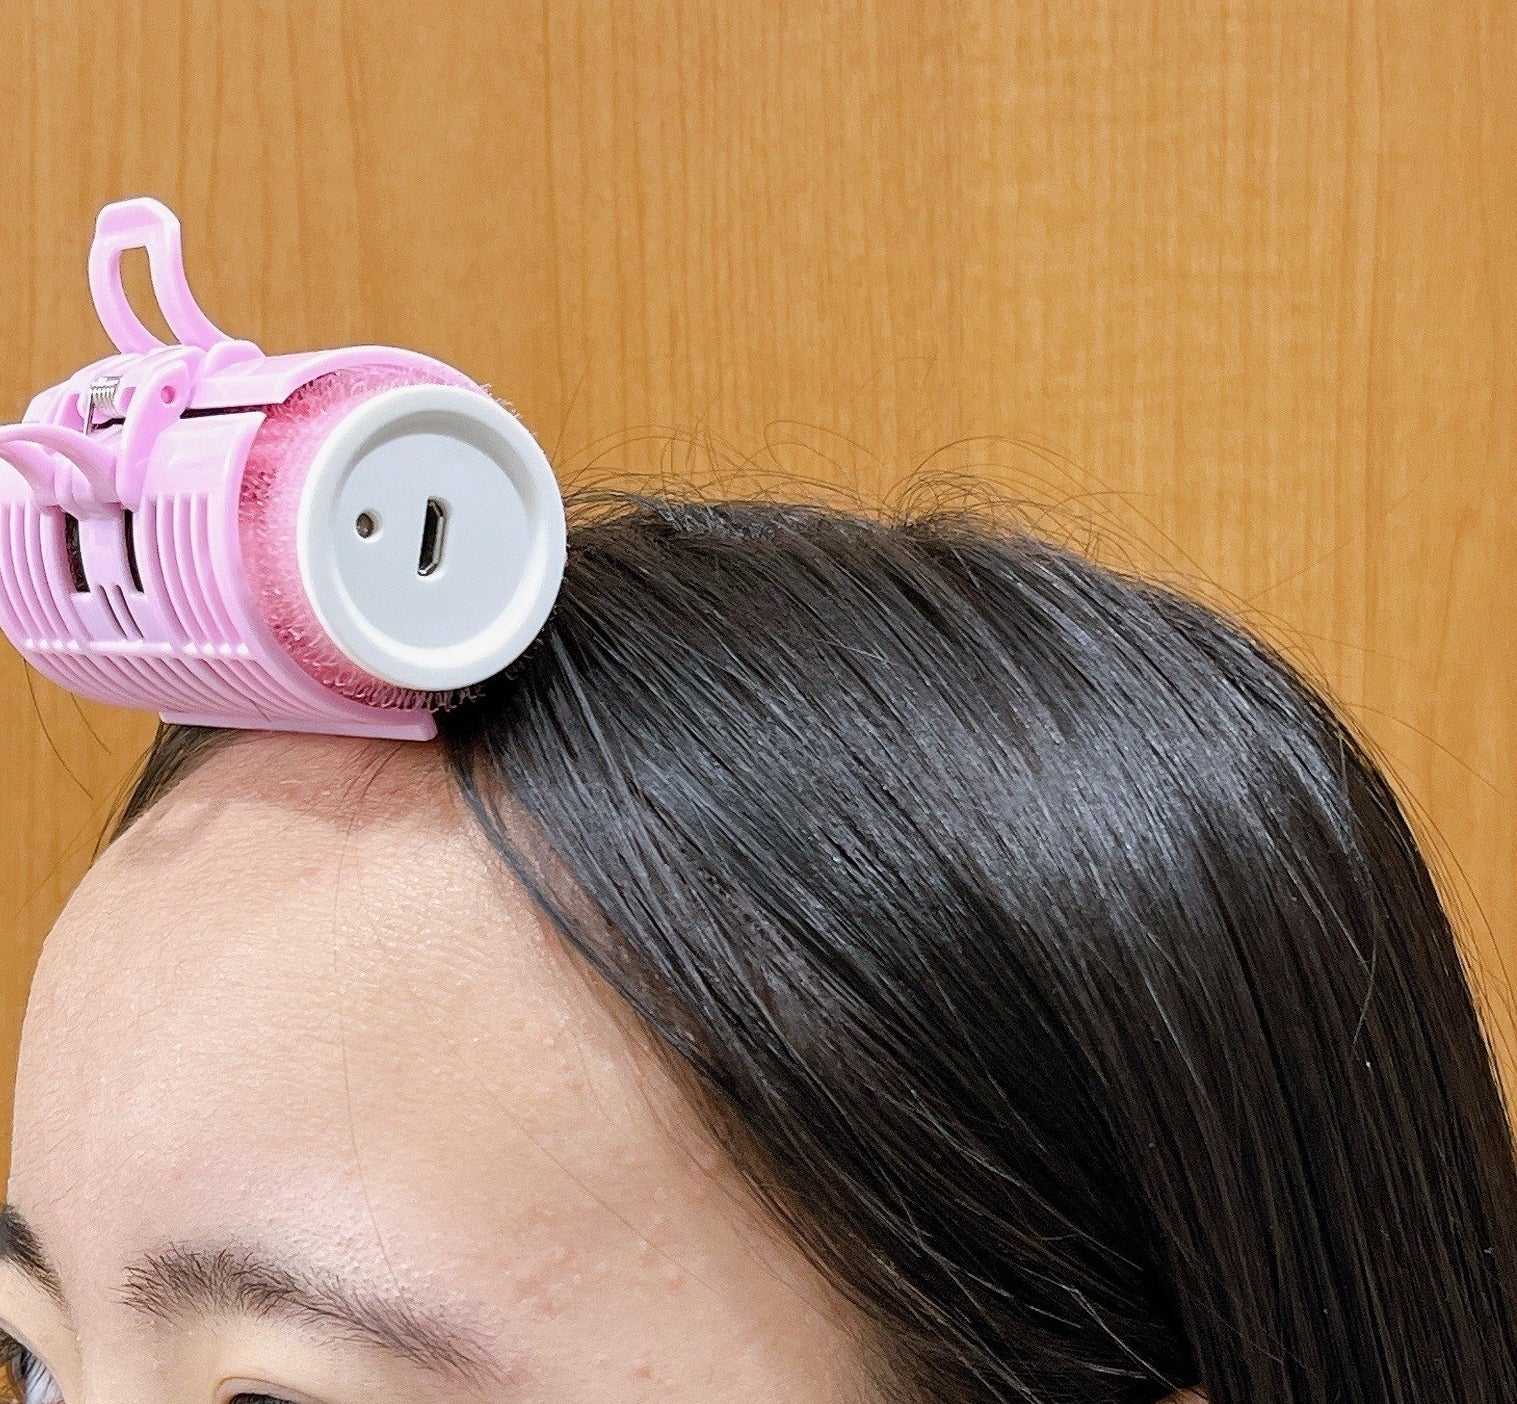 DAISO（ダイソー）の便利なヘアアイテム「ホットカーラーＵＳＢ加熱タイプ」